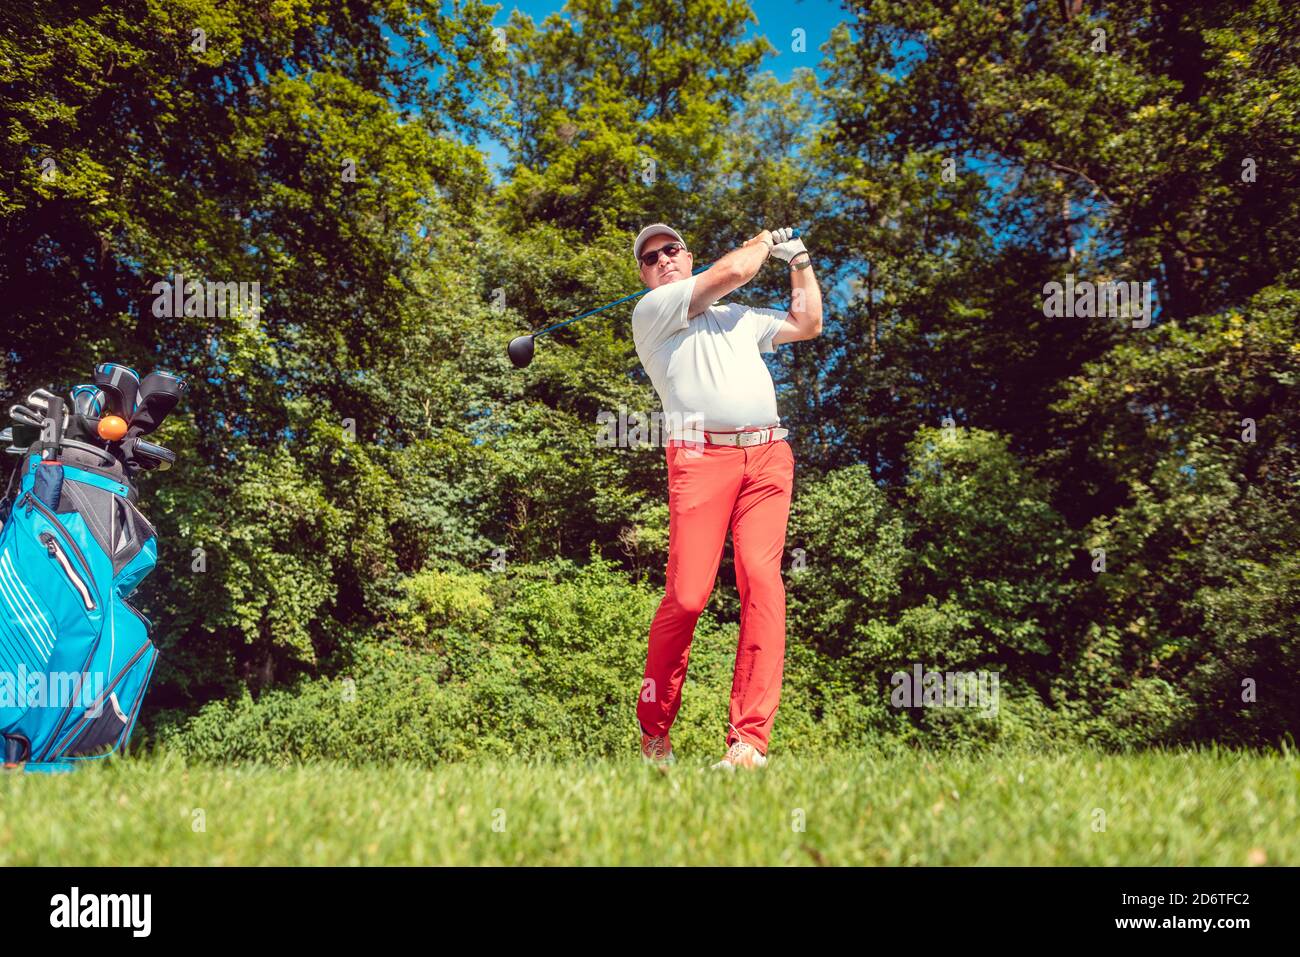 Golf player at the tee hitting ball far Stock Photo